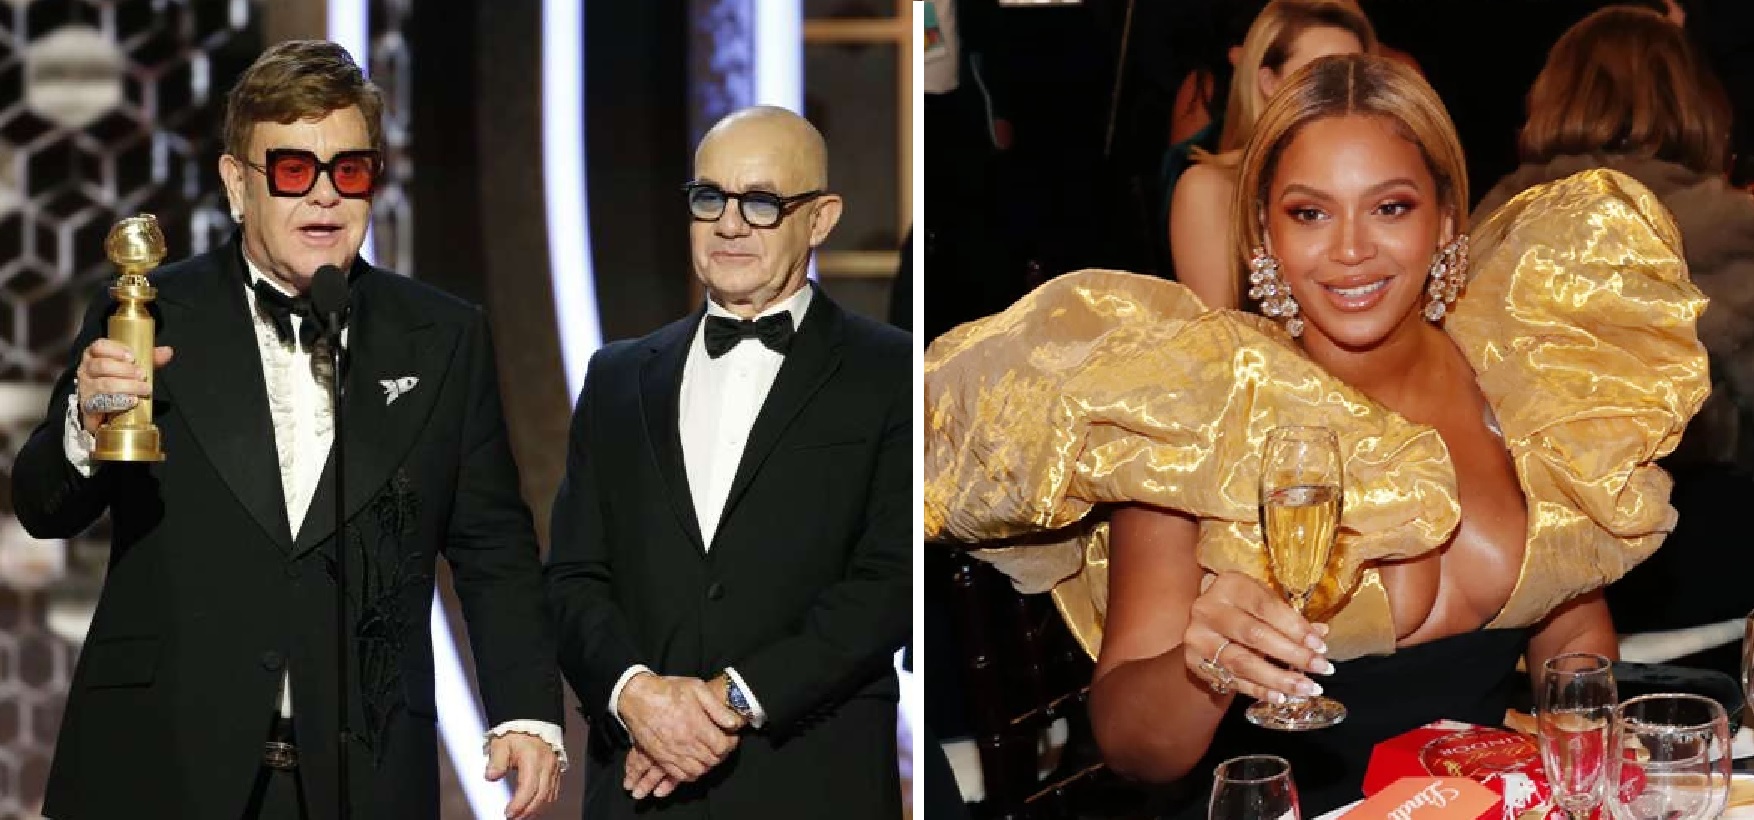 Beyonce Loses Golden Globe For ‘Best Original Song’ To Elton John!